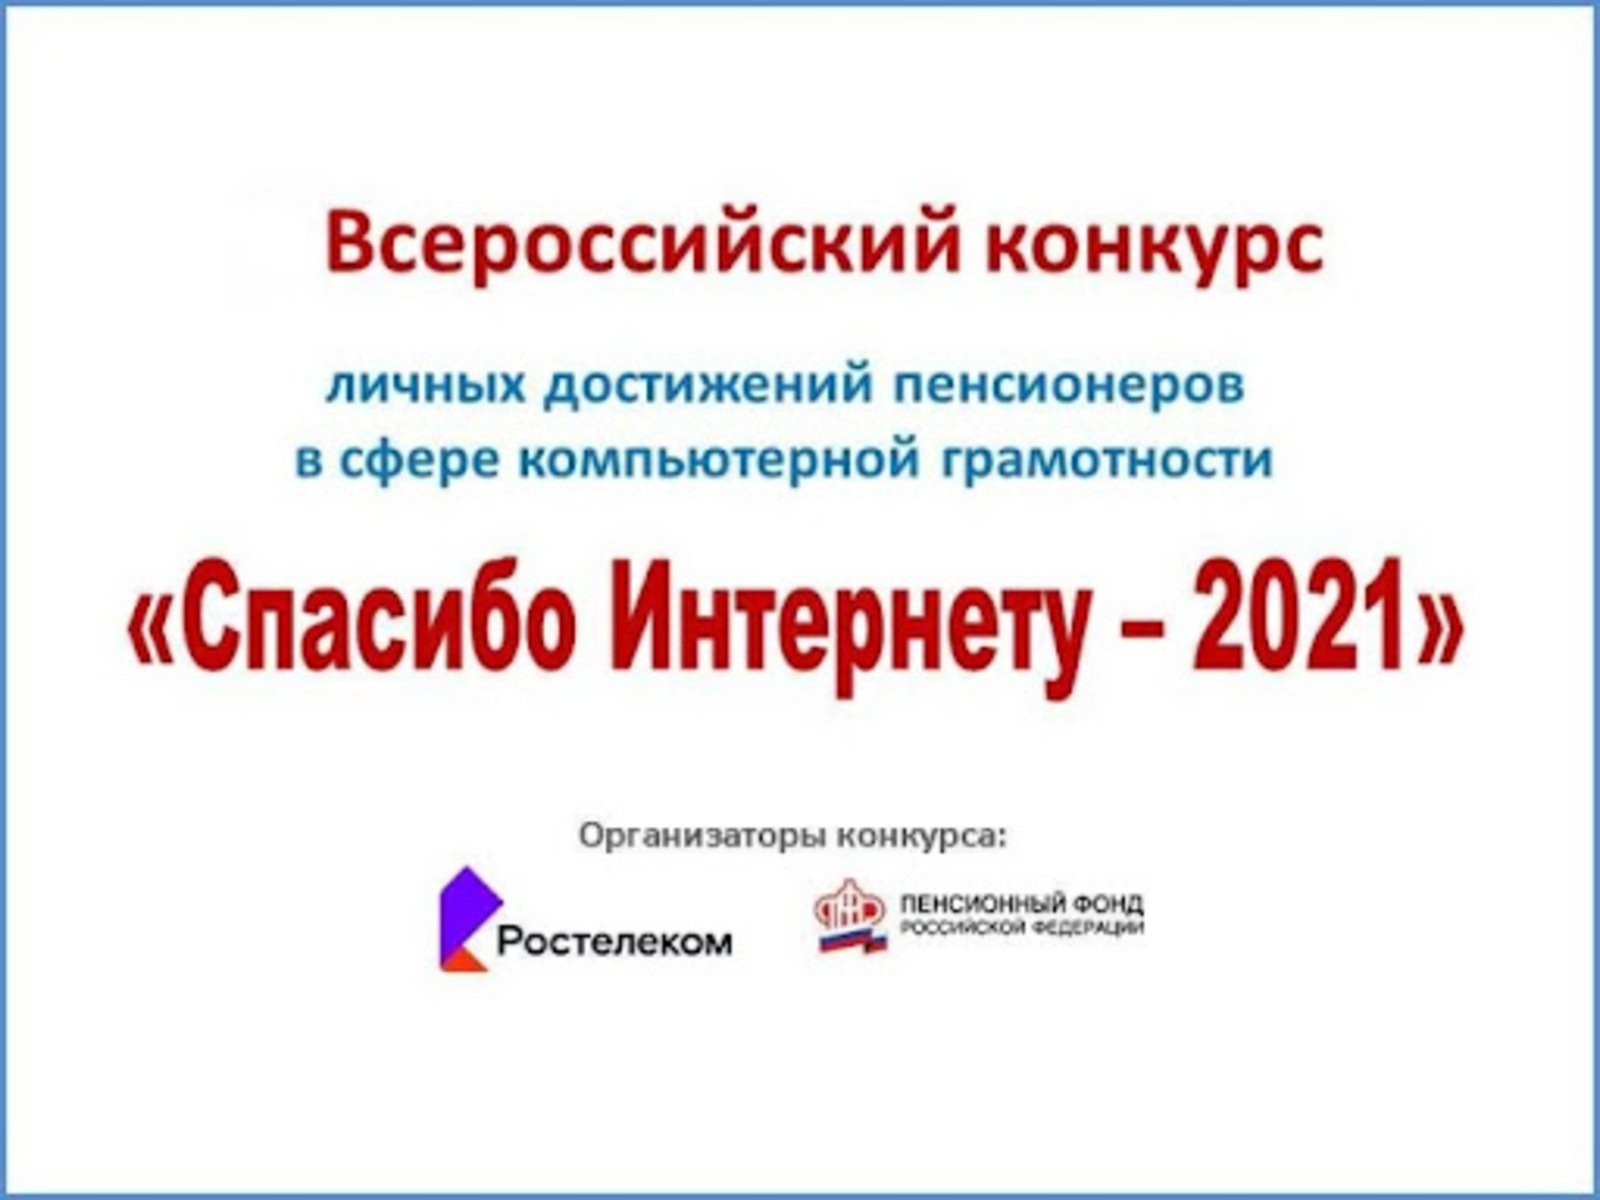 Пенсионеры Башкирии приглашаются к участию во Всероссийском конкурсе «Спасибо интернету 2021»